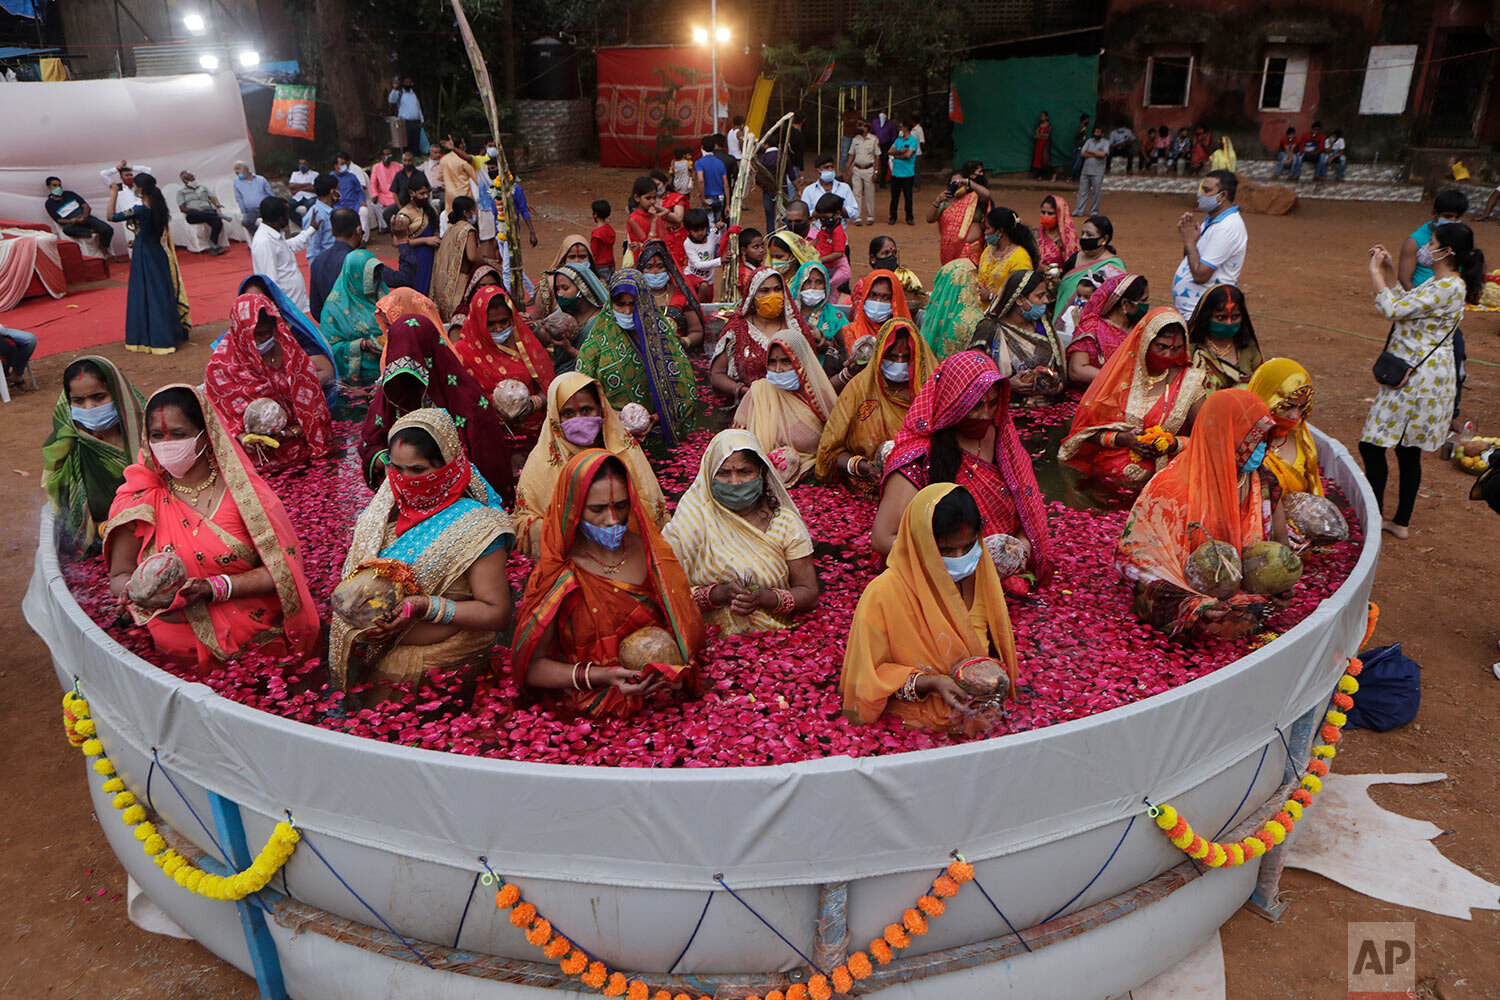  Indian women perform rituals standing inside an artificial pond on Chhat Puja festival in Mumbai, India, Friday, Nov. 20, 2020.  (AP Photo/Rajanish Kakade) 